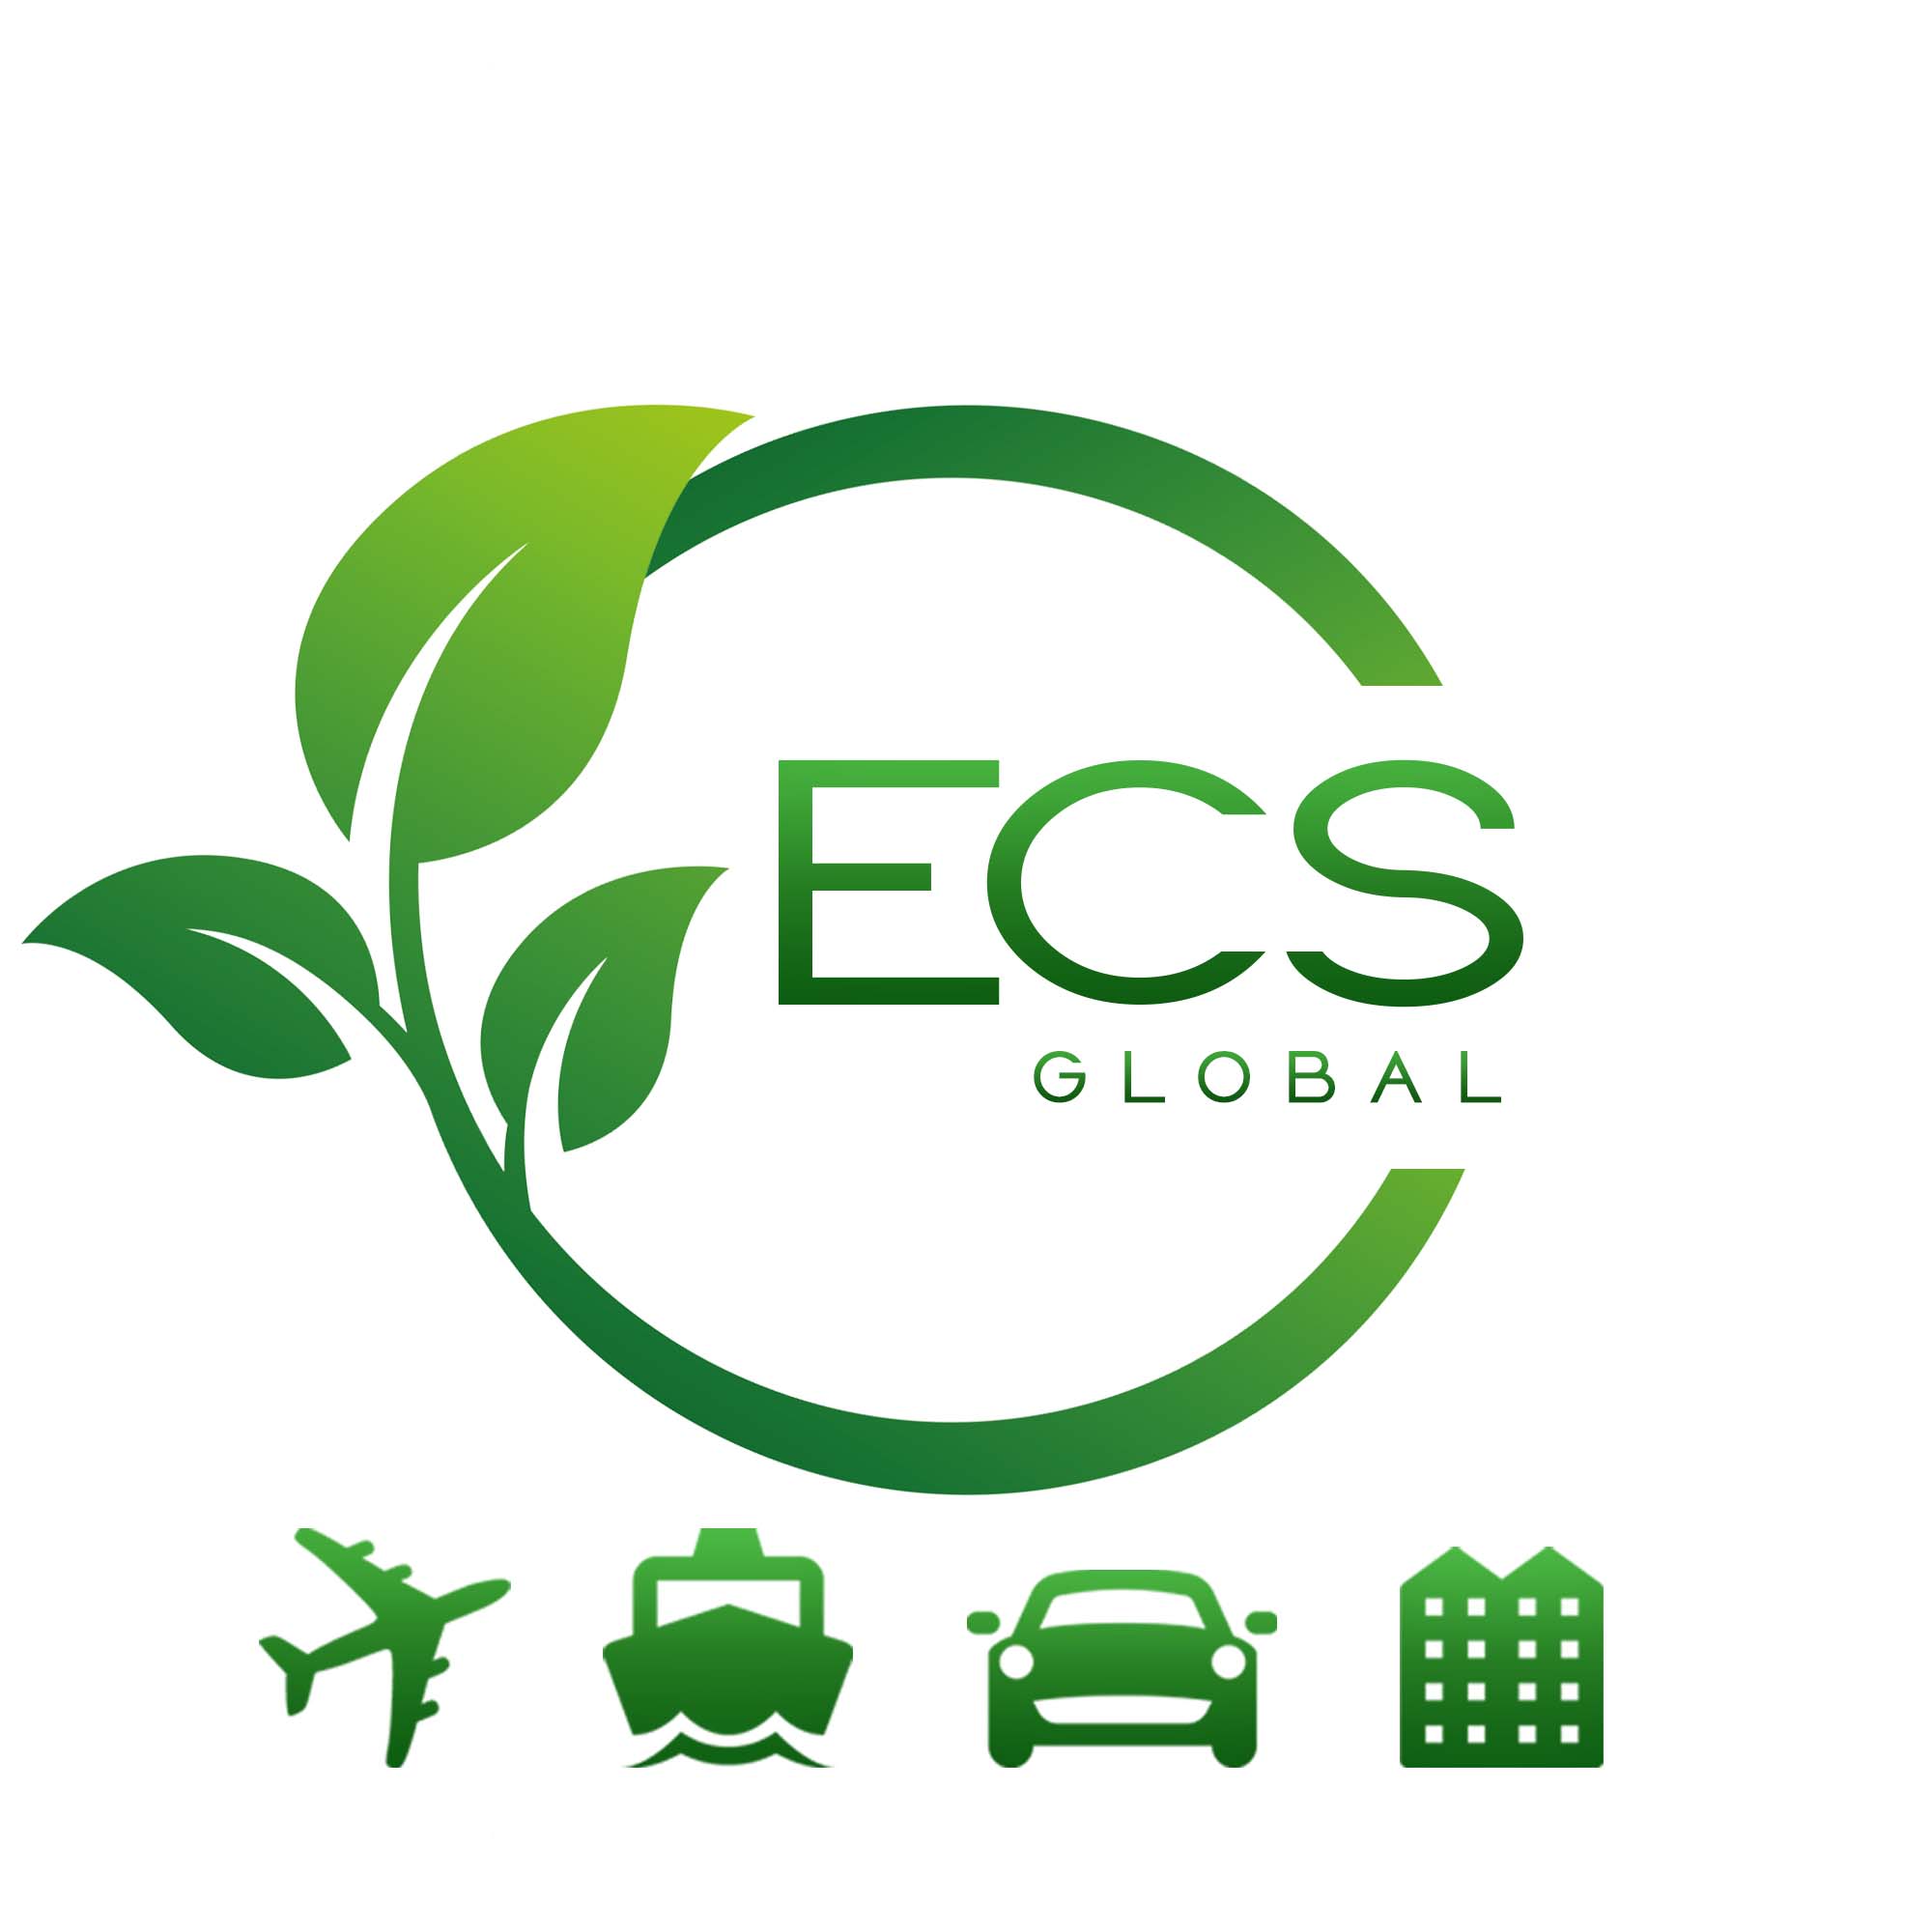 ECS Global